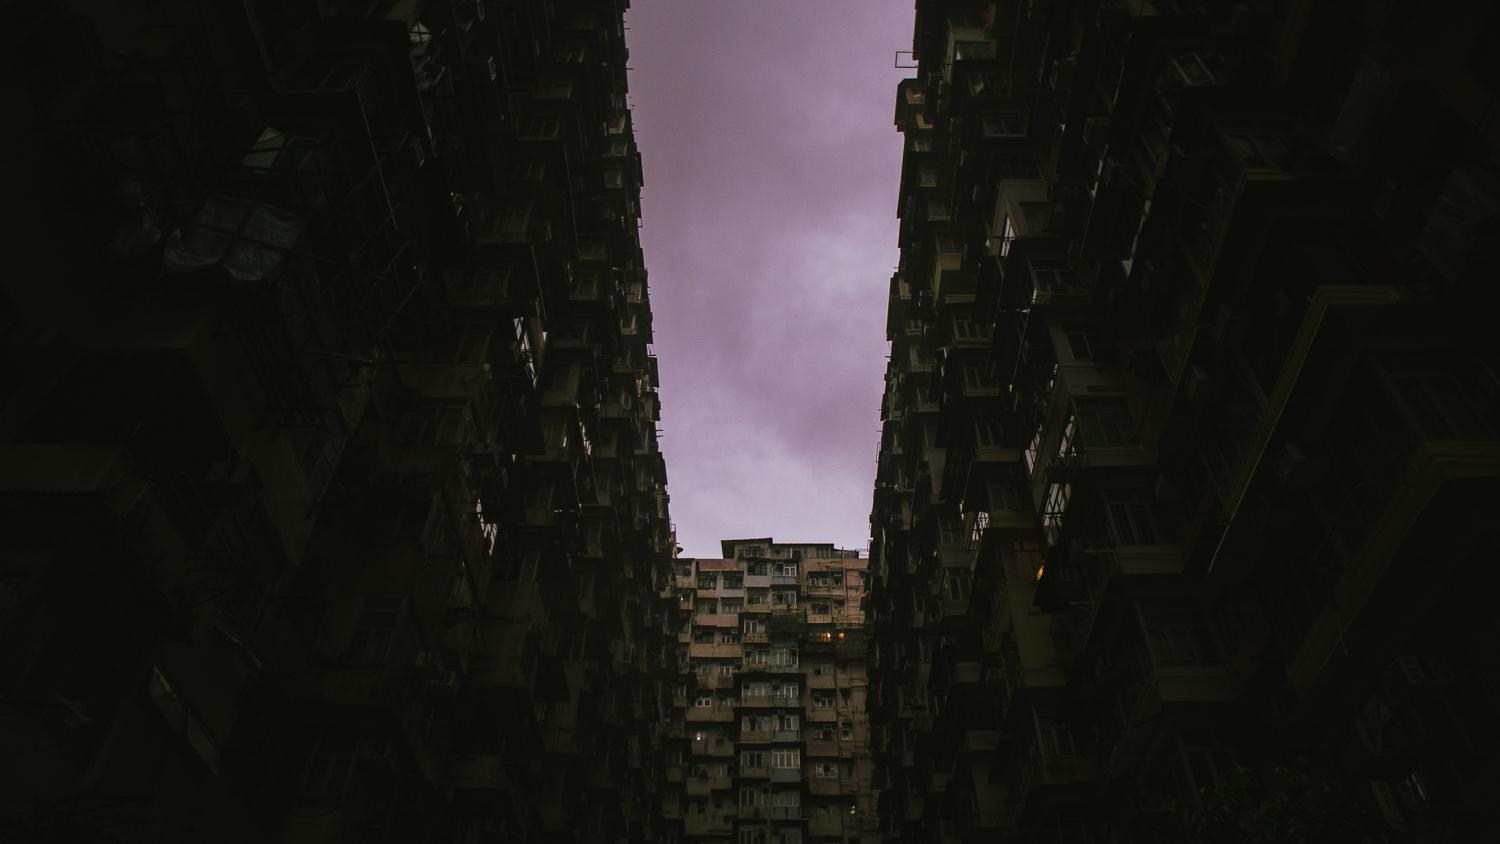 Megastructures of Hong Kong